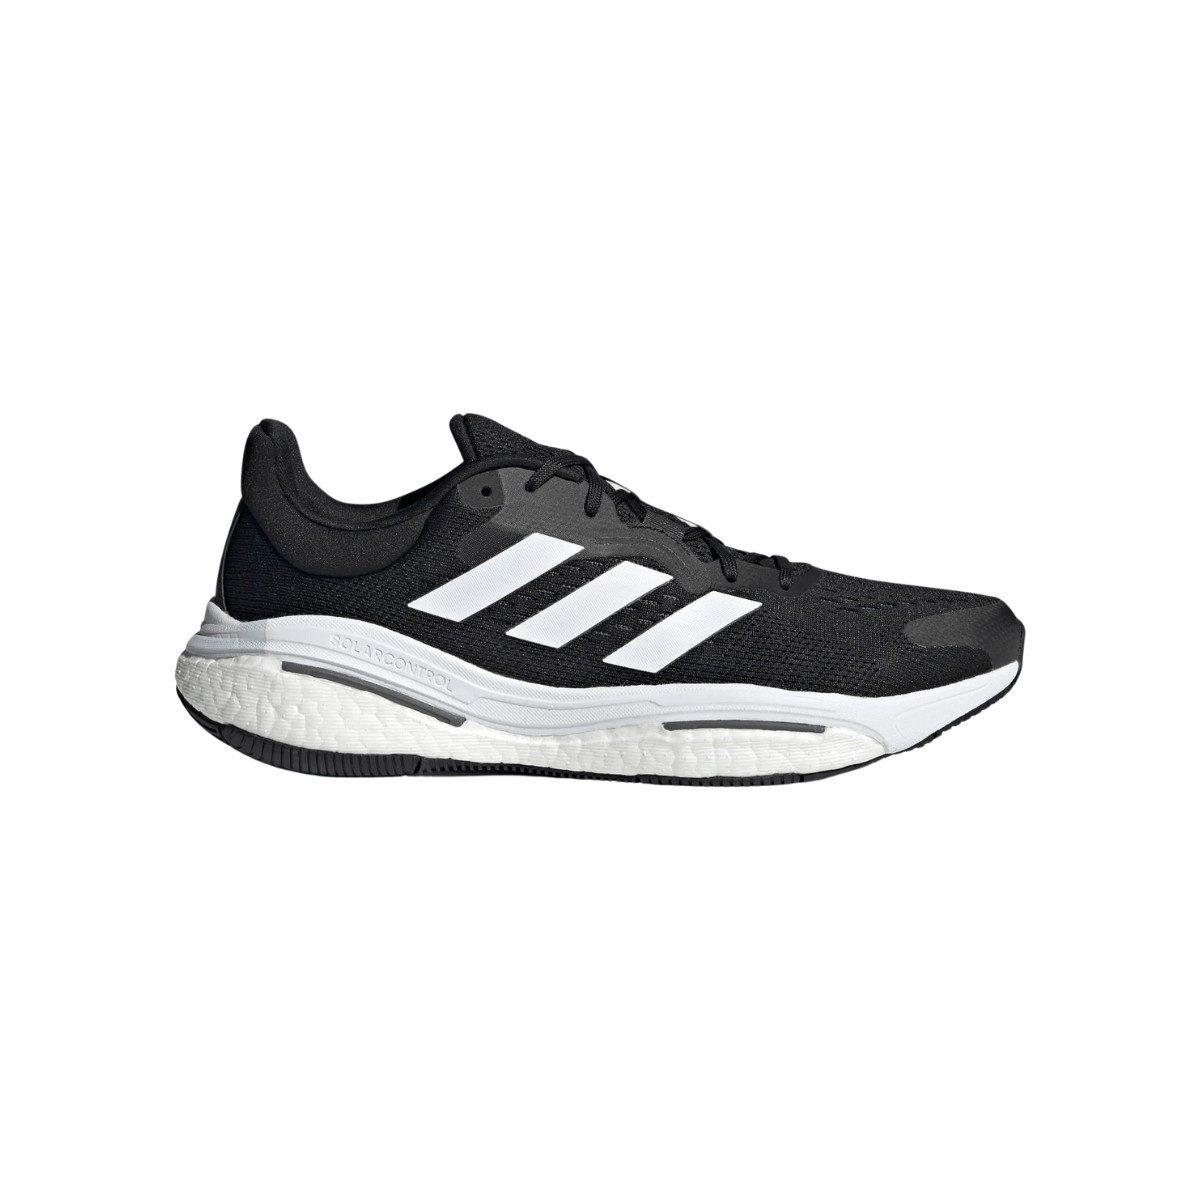 Zapatillas Adidas Solarcontrol Negro Blanco AW22, Talla UK 7.5